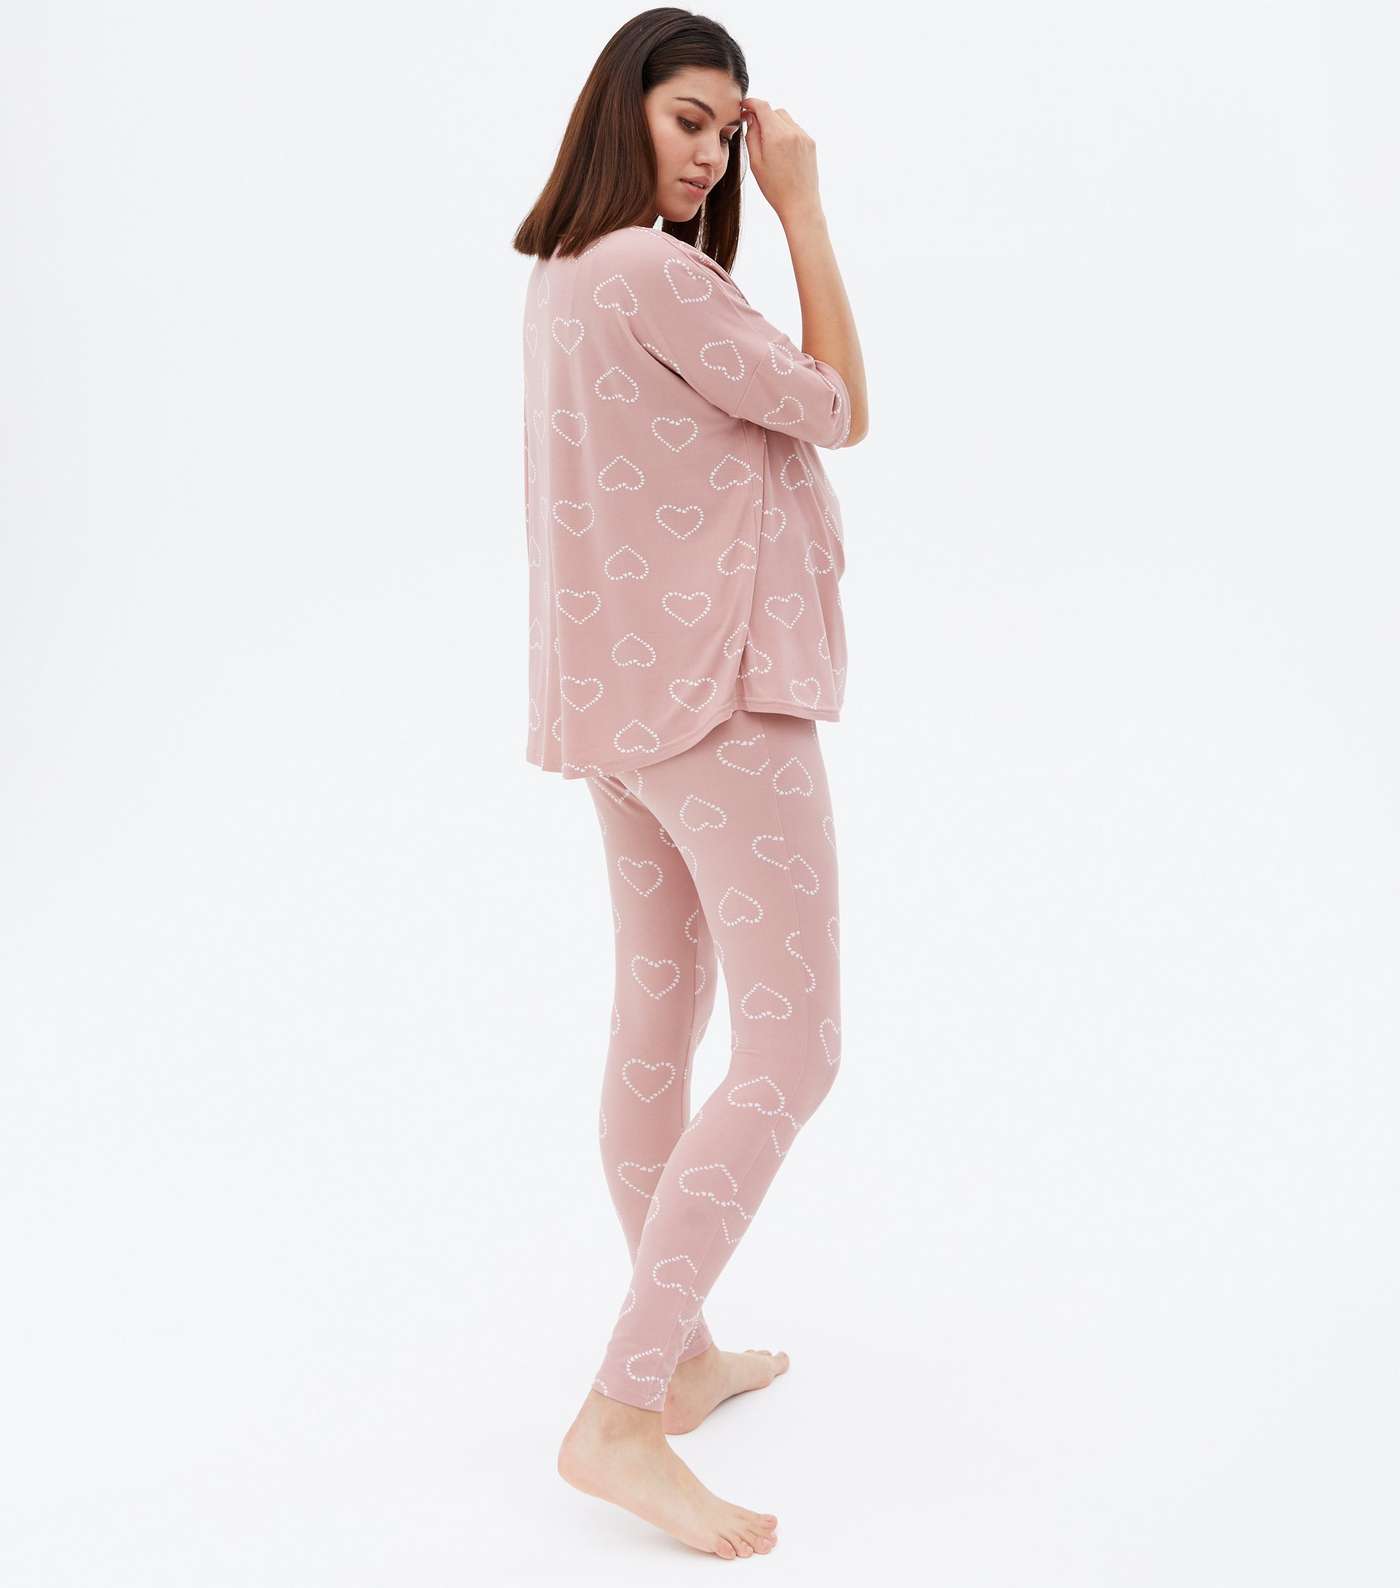 Maternity Pink Legging Pyjama Set with Heart Print Image 4